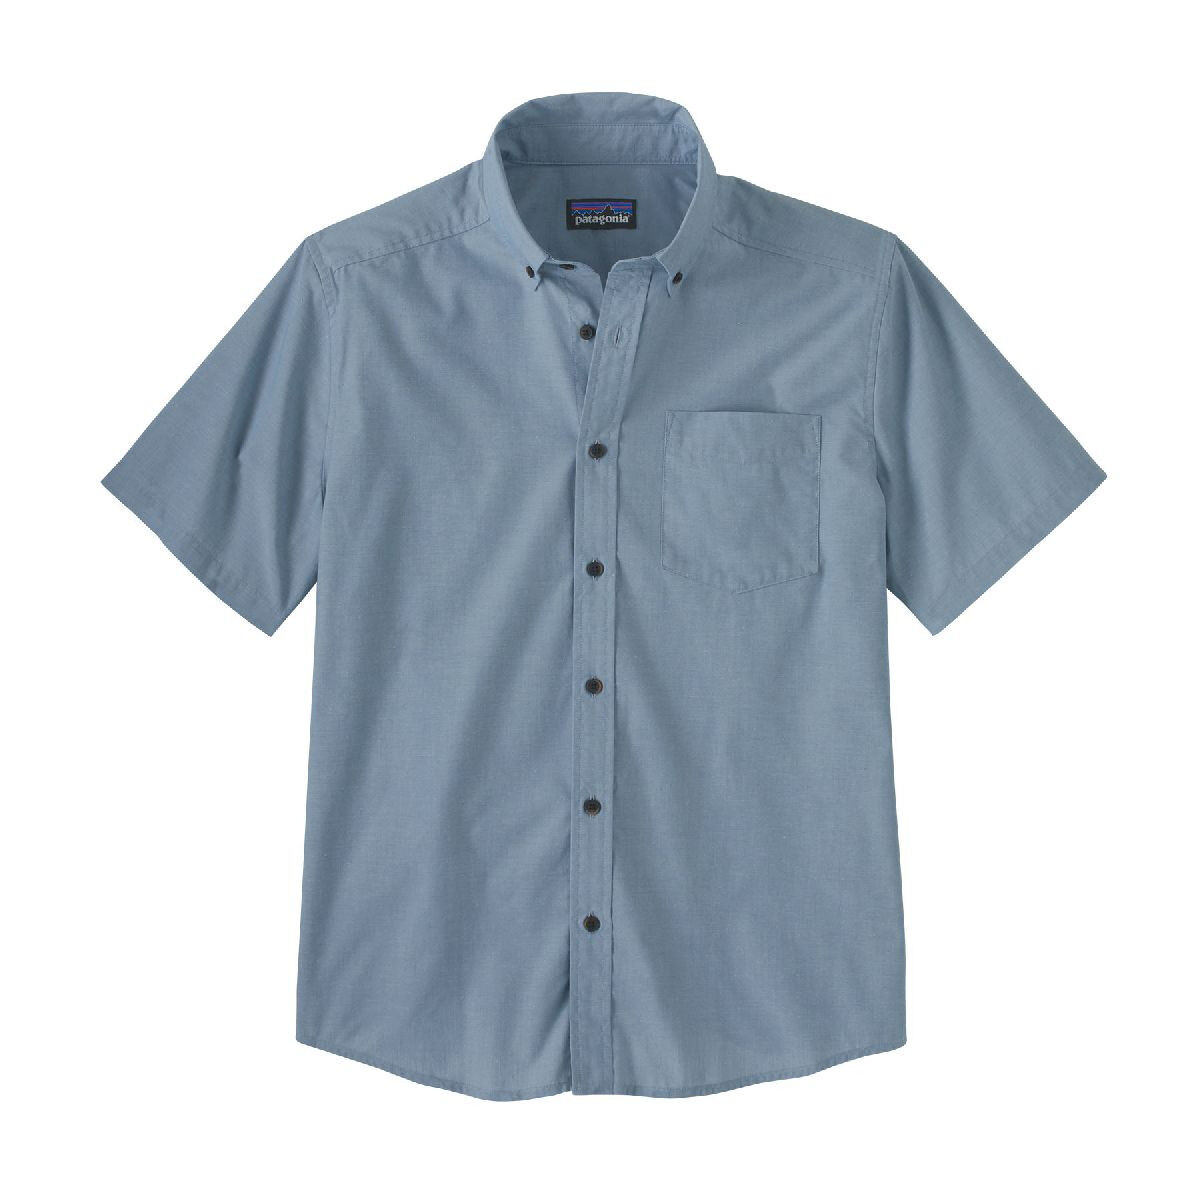 Patagonia Daily Shirt - Camicia - Uomo